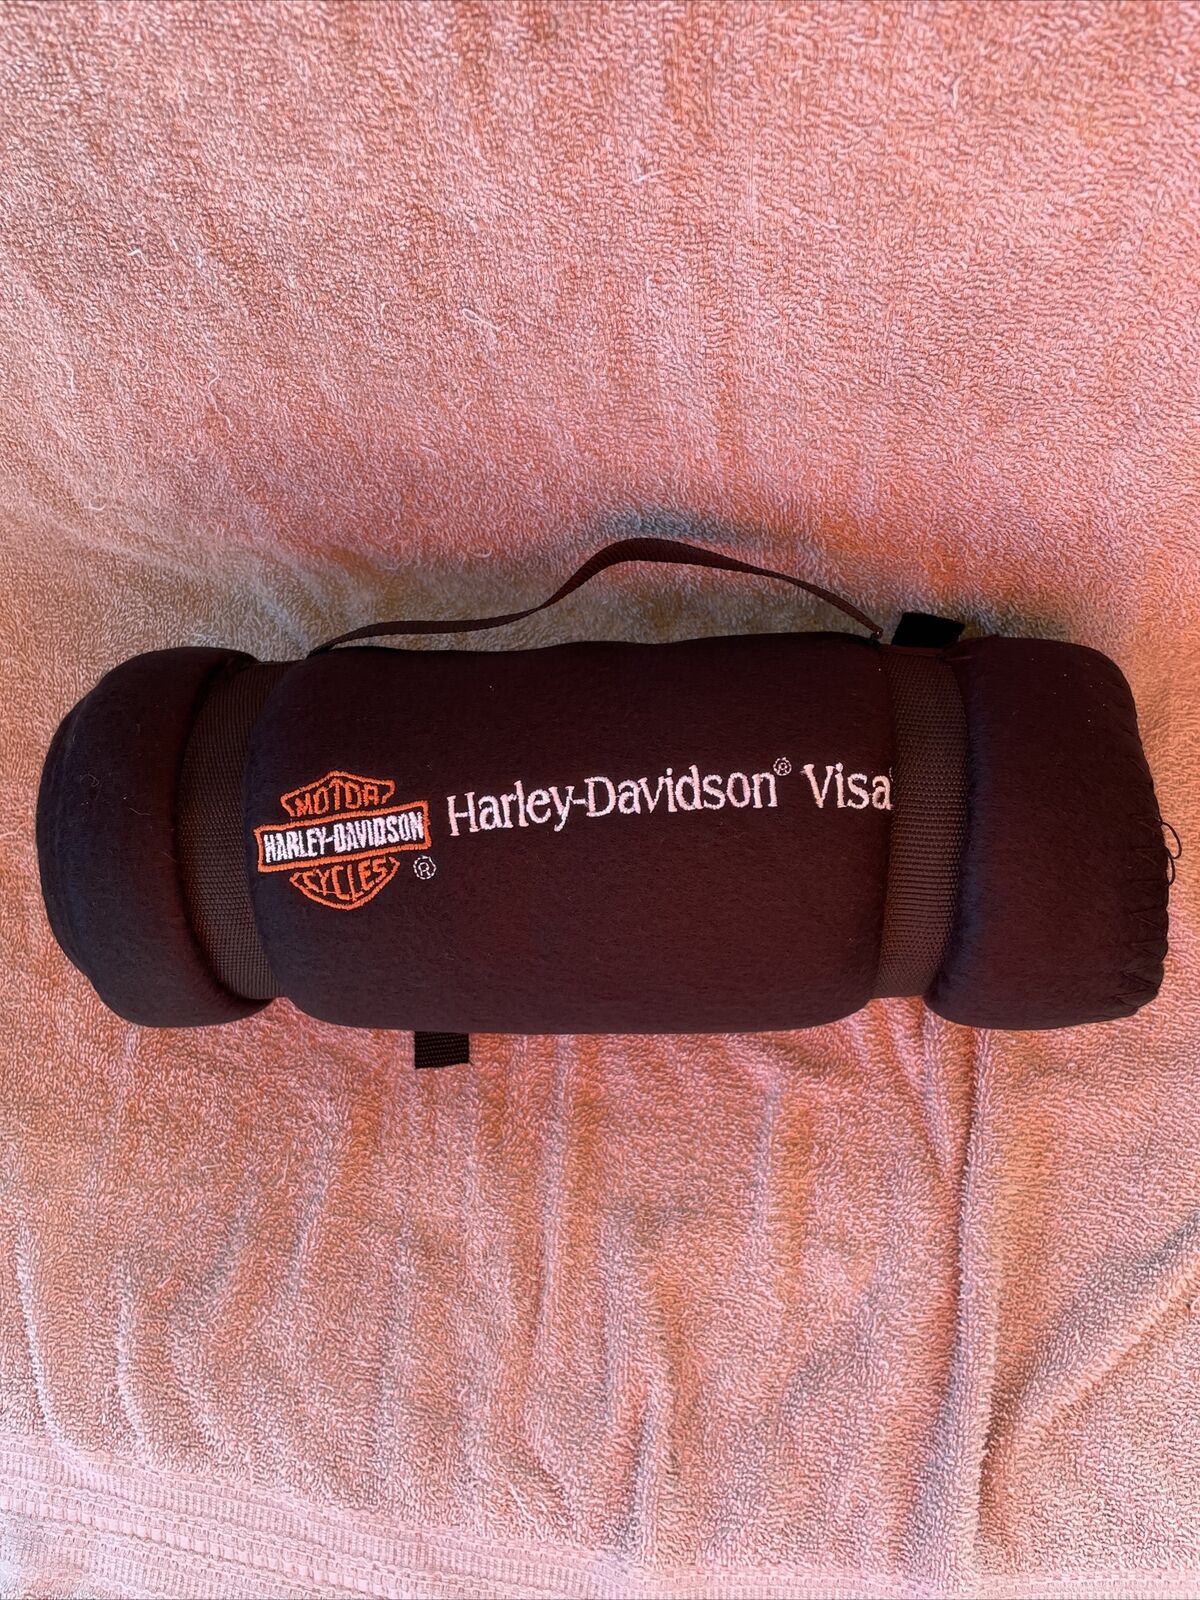 Harley Davidson Visa Fleece Throw Blanket 48x60 - new in original packaging (48)